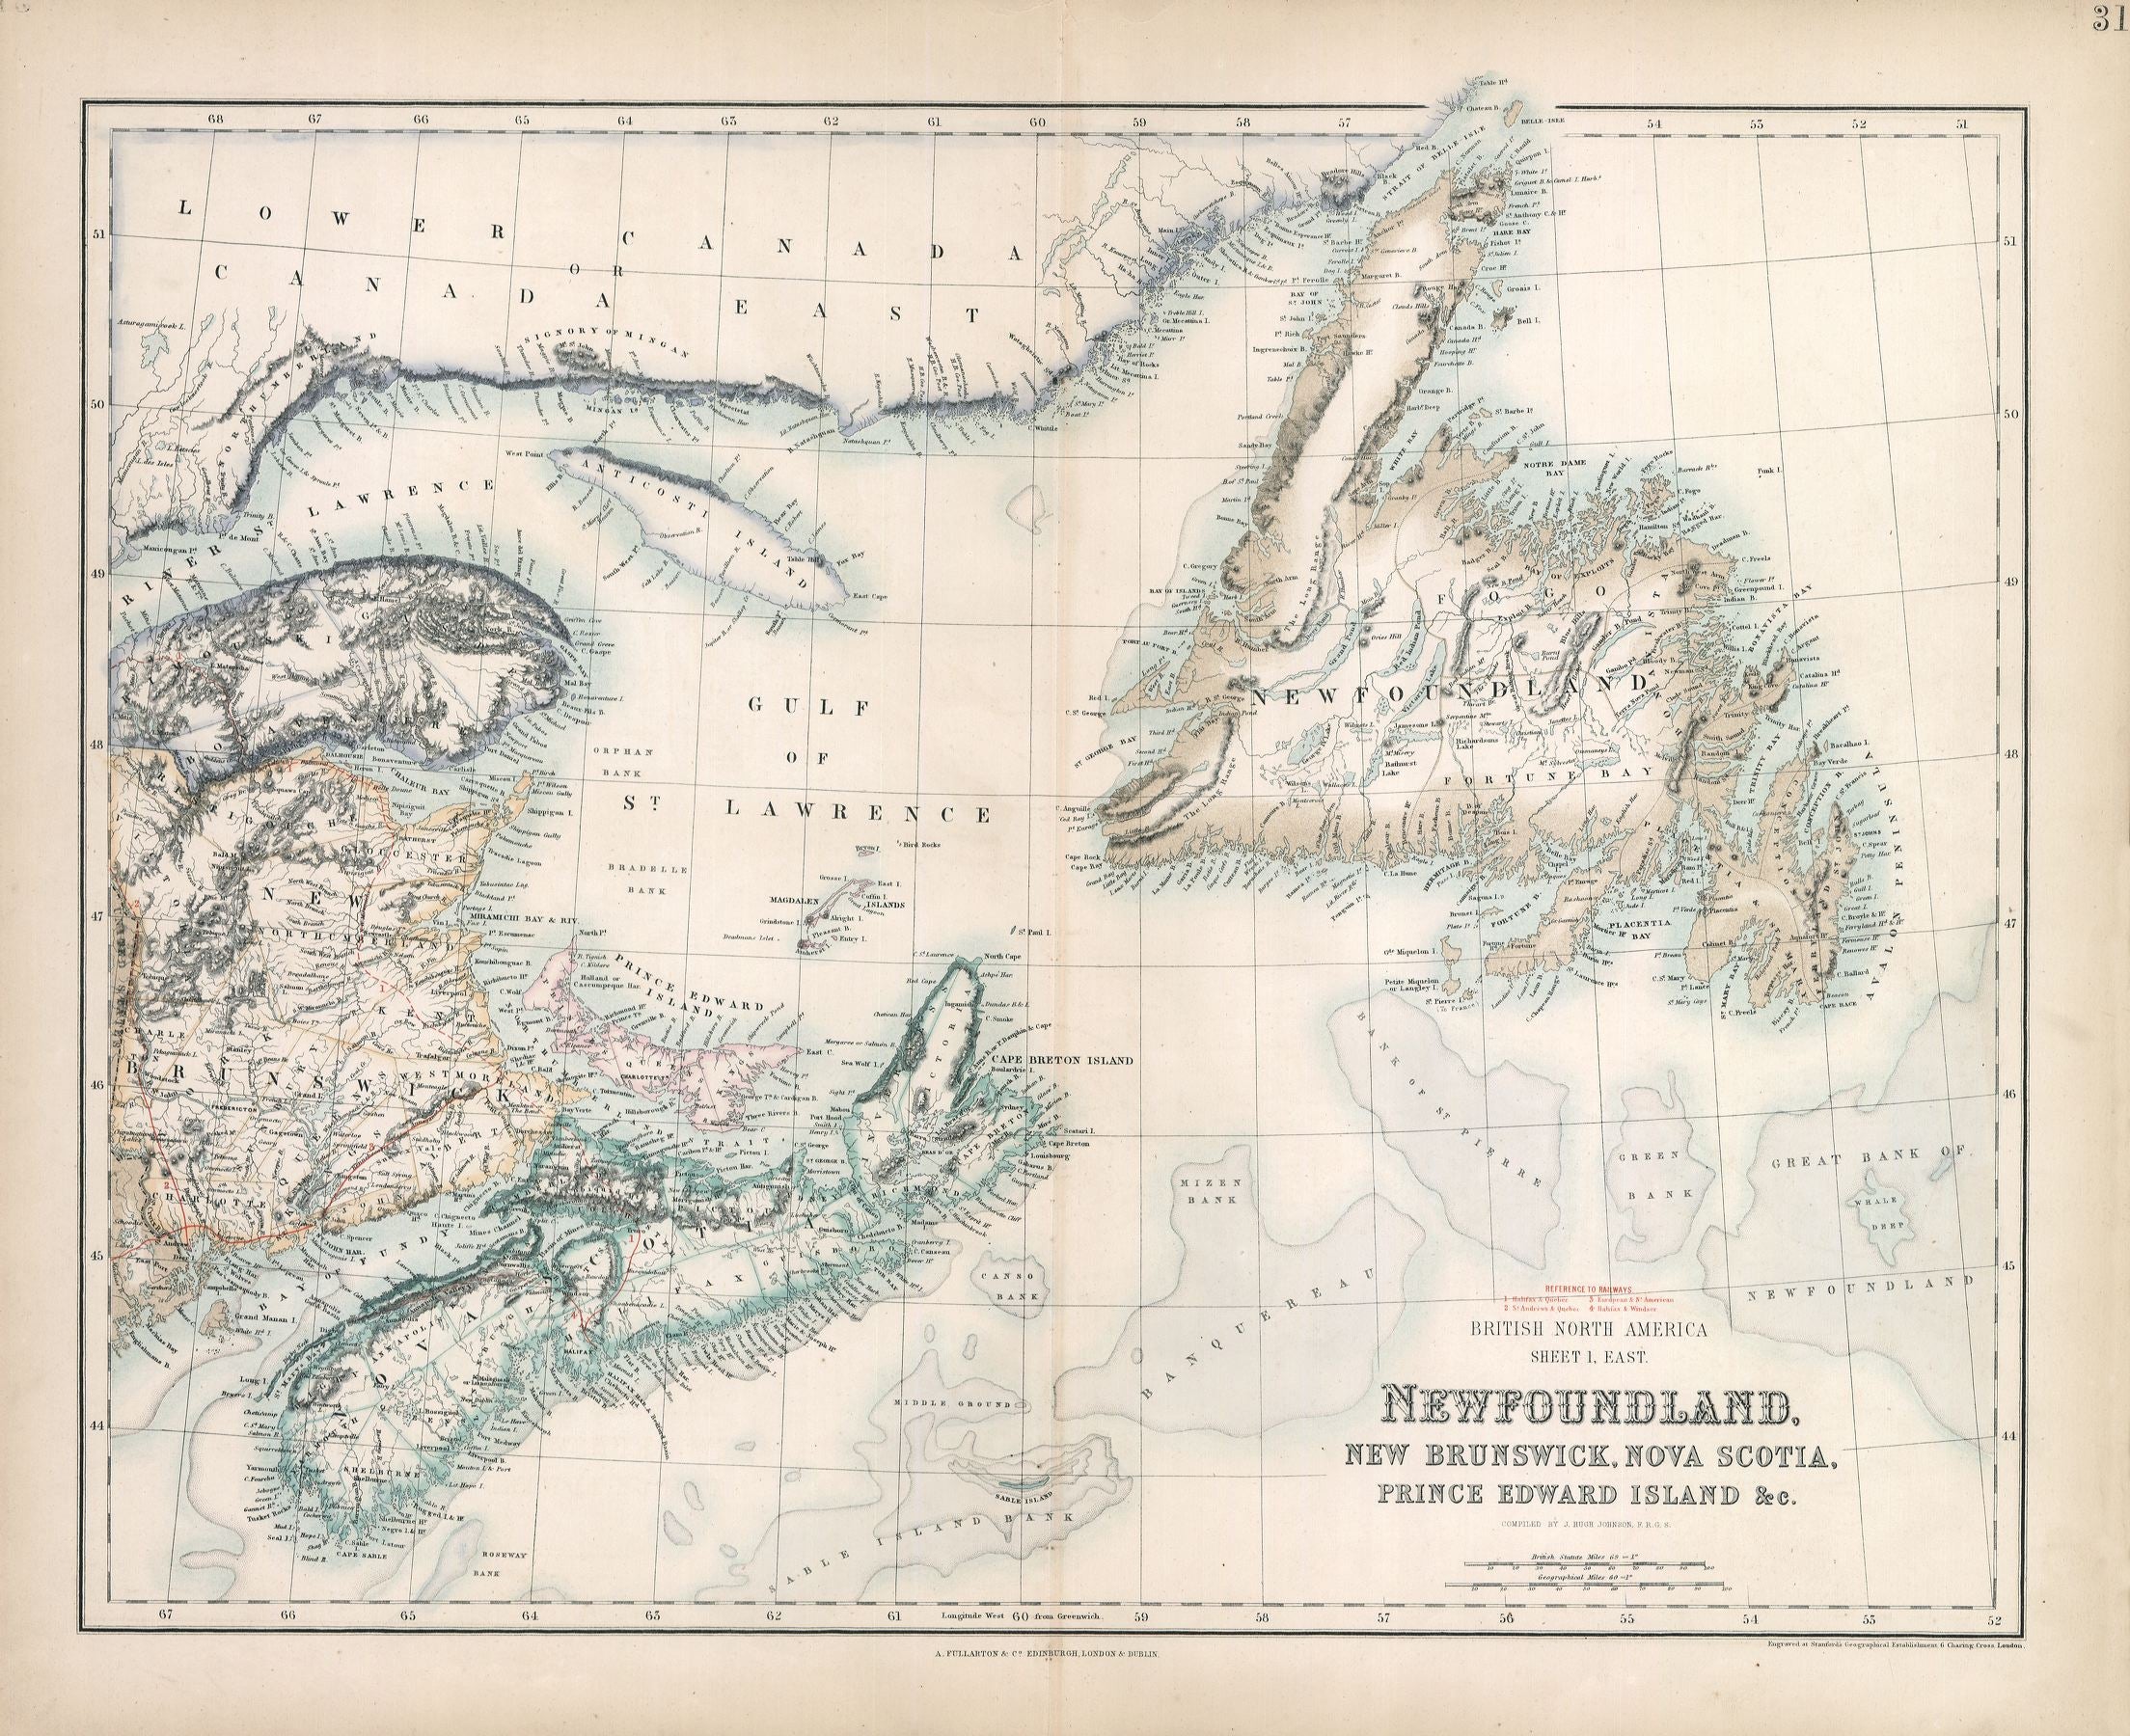 Fullarton, Archibald: British North America sheet I. East. Newfoundland, New Brunswick, Nova Scotia, Prince Edward Island & c. 1874